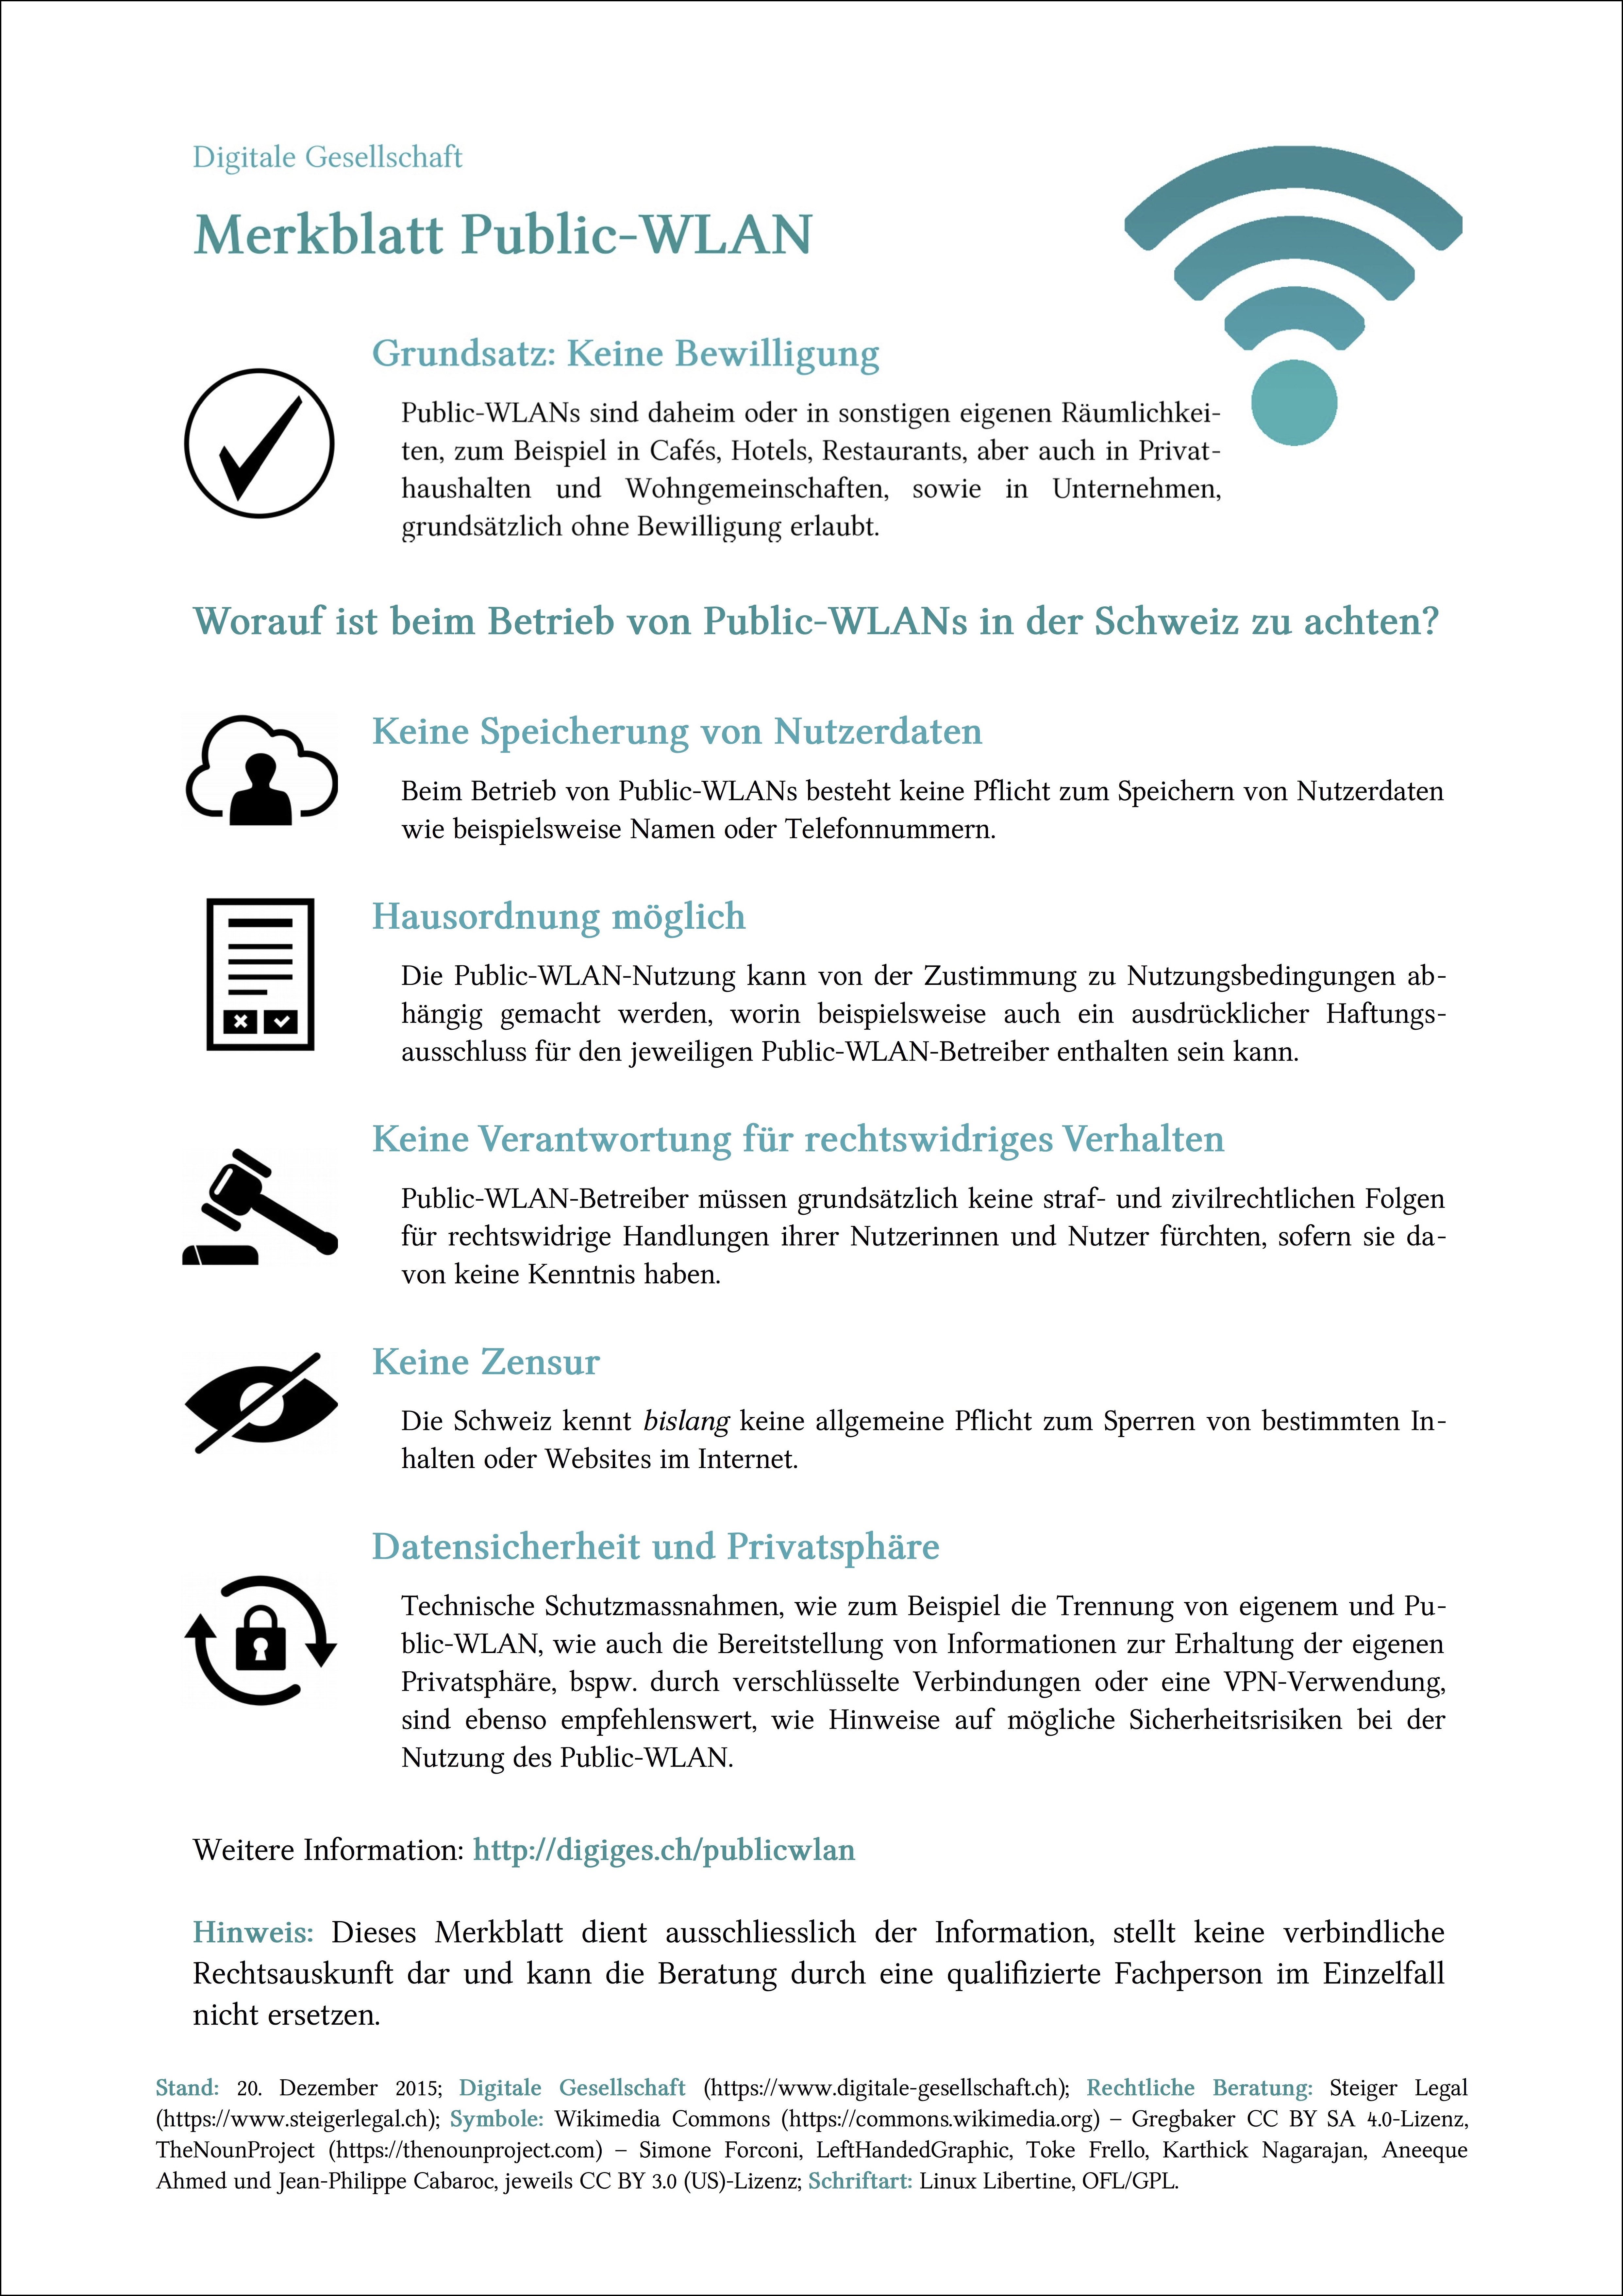 Merkblatt Public WLAN in der Schweiz